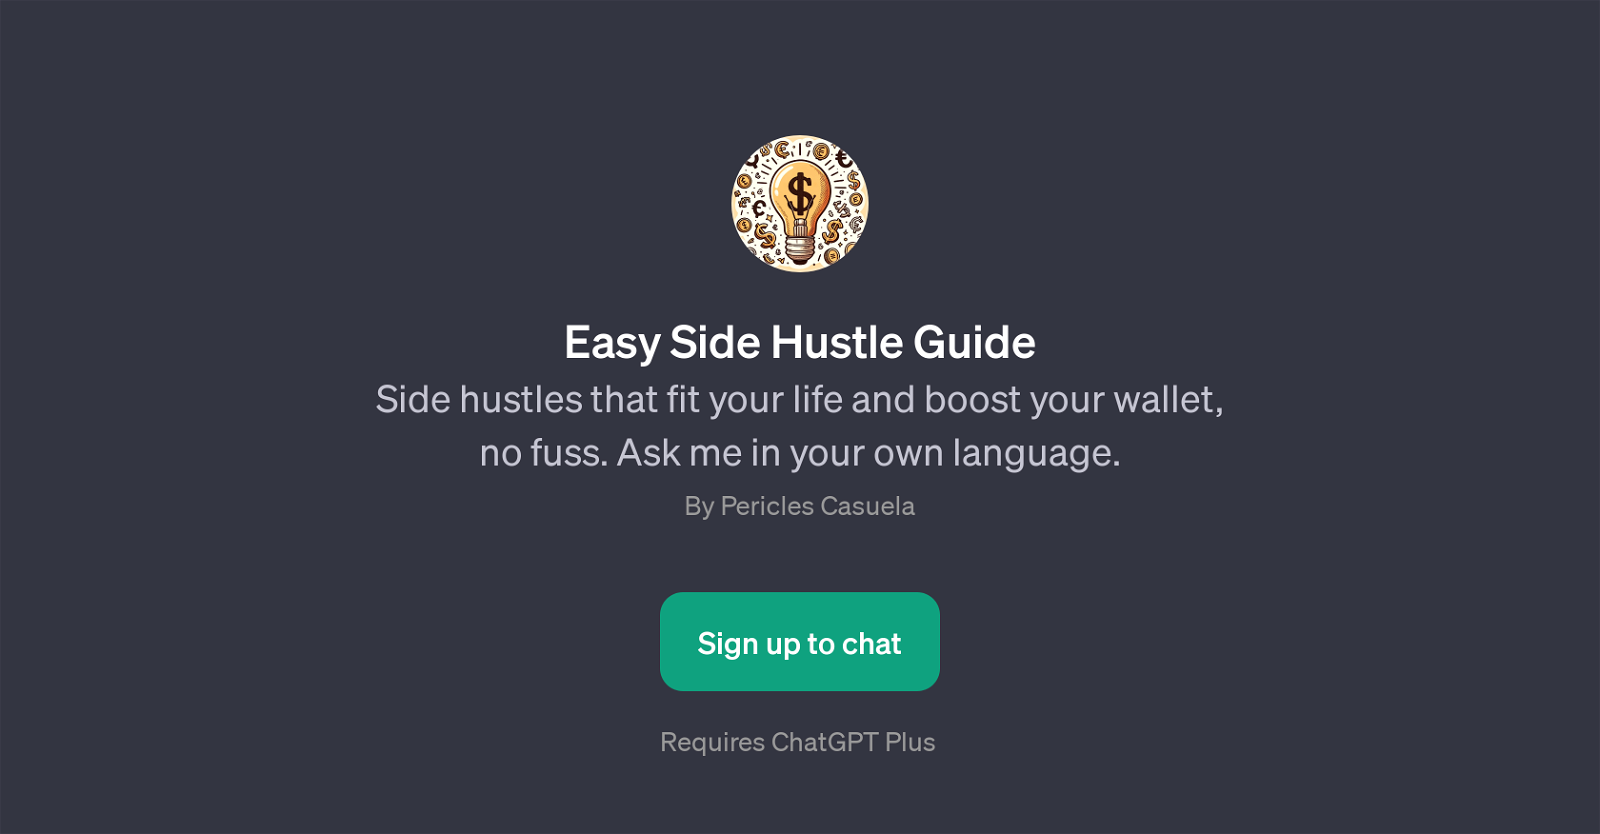 Easy Side Hustle Guide website